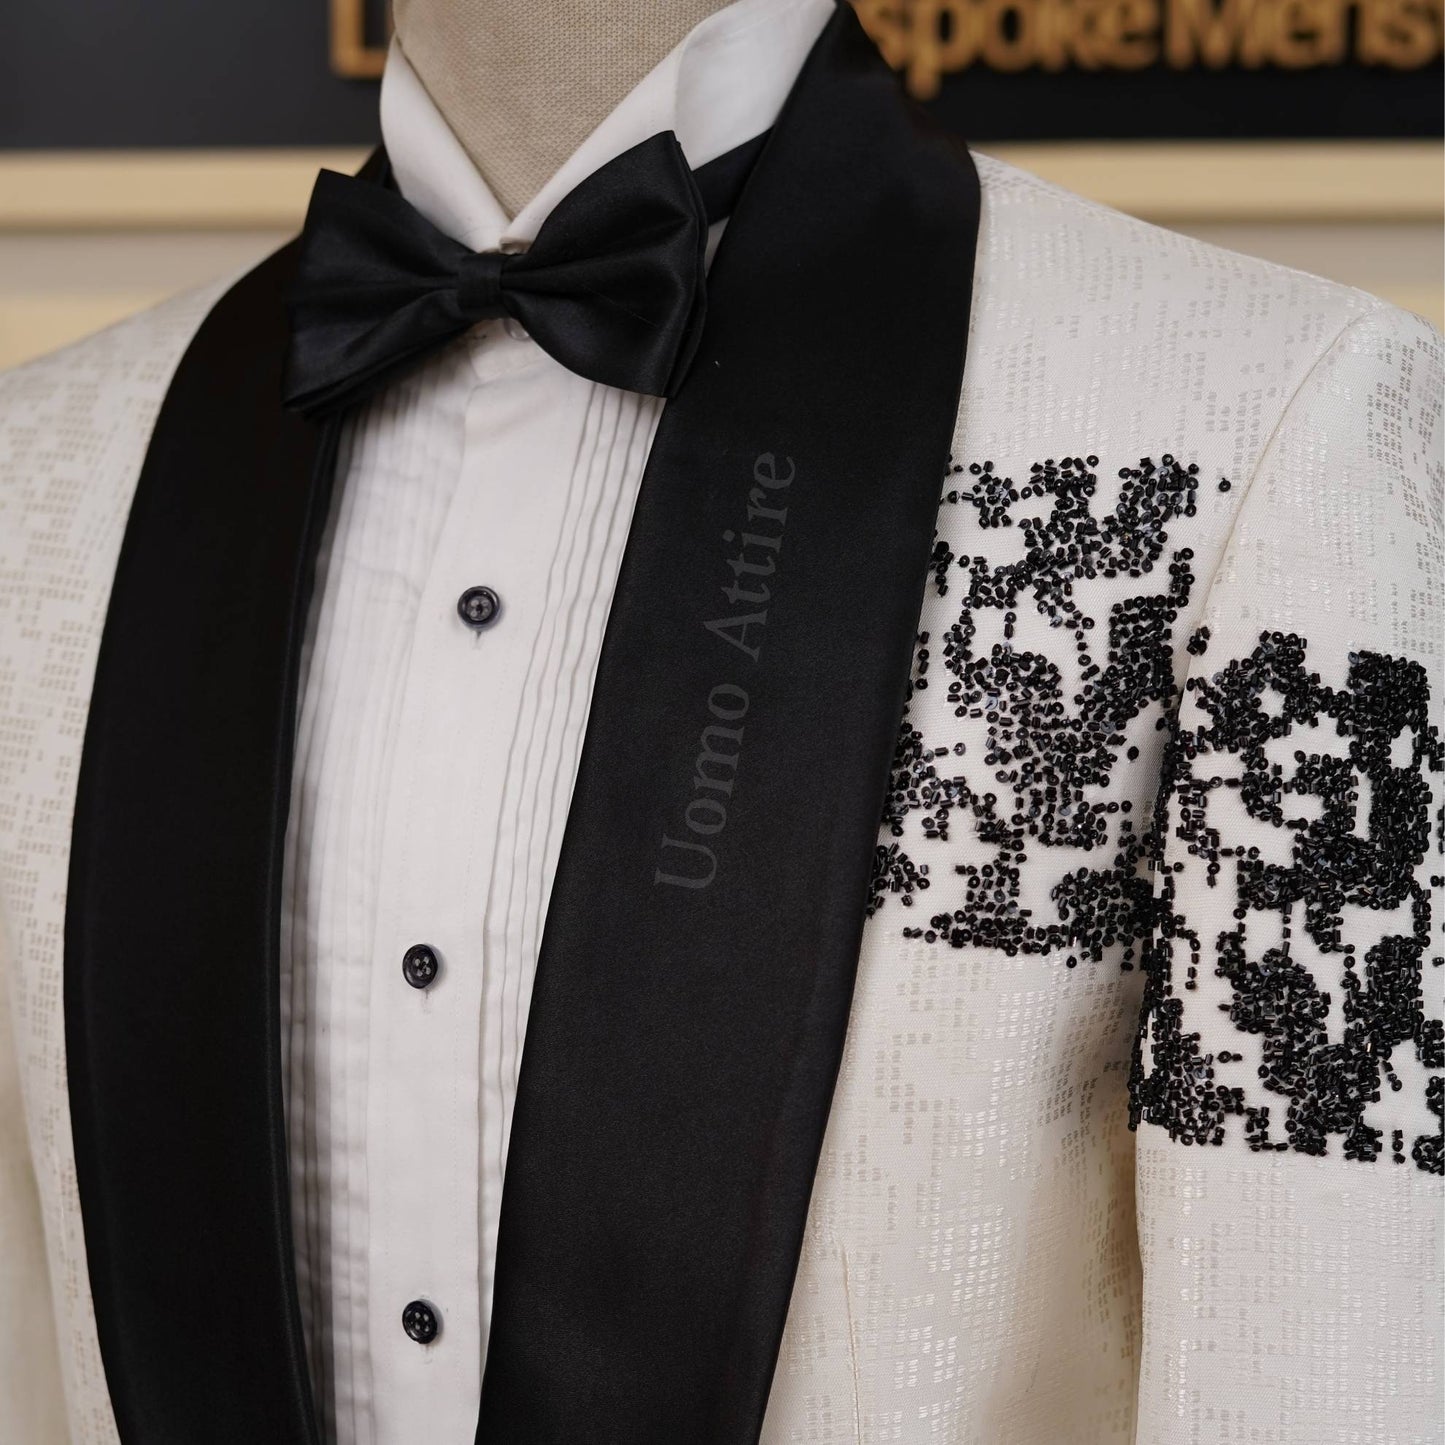 
                  
                    White tuxedo 2 piece suit for stylish look
                  
                